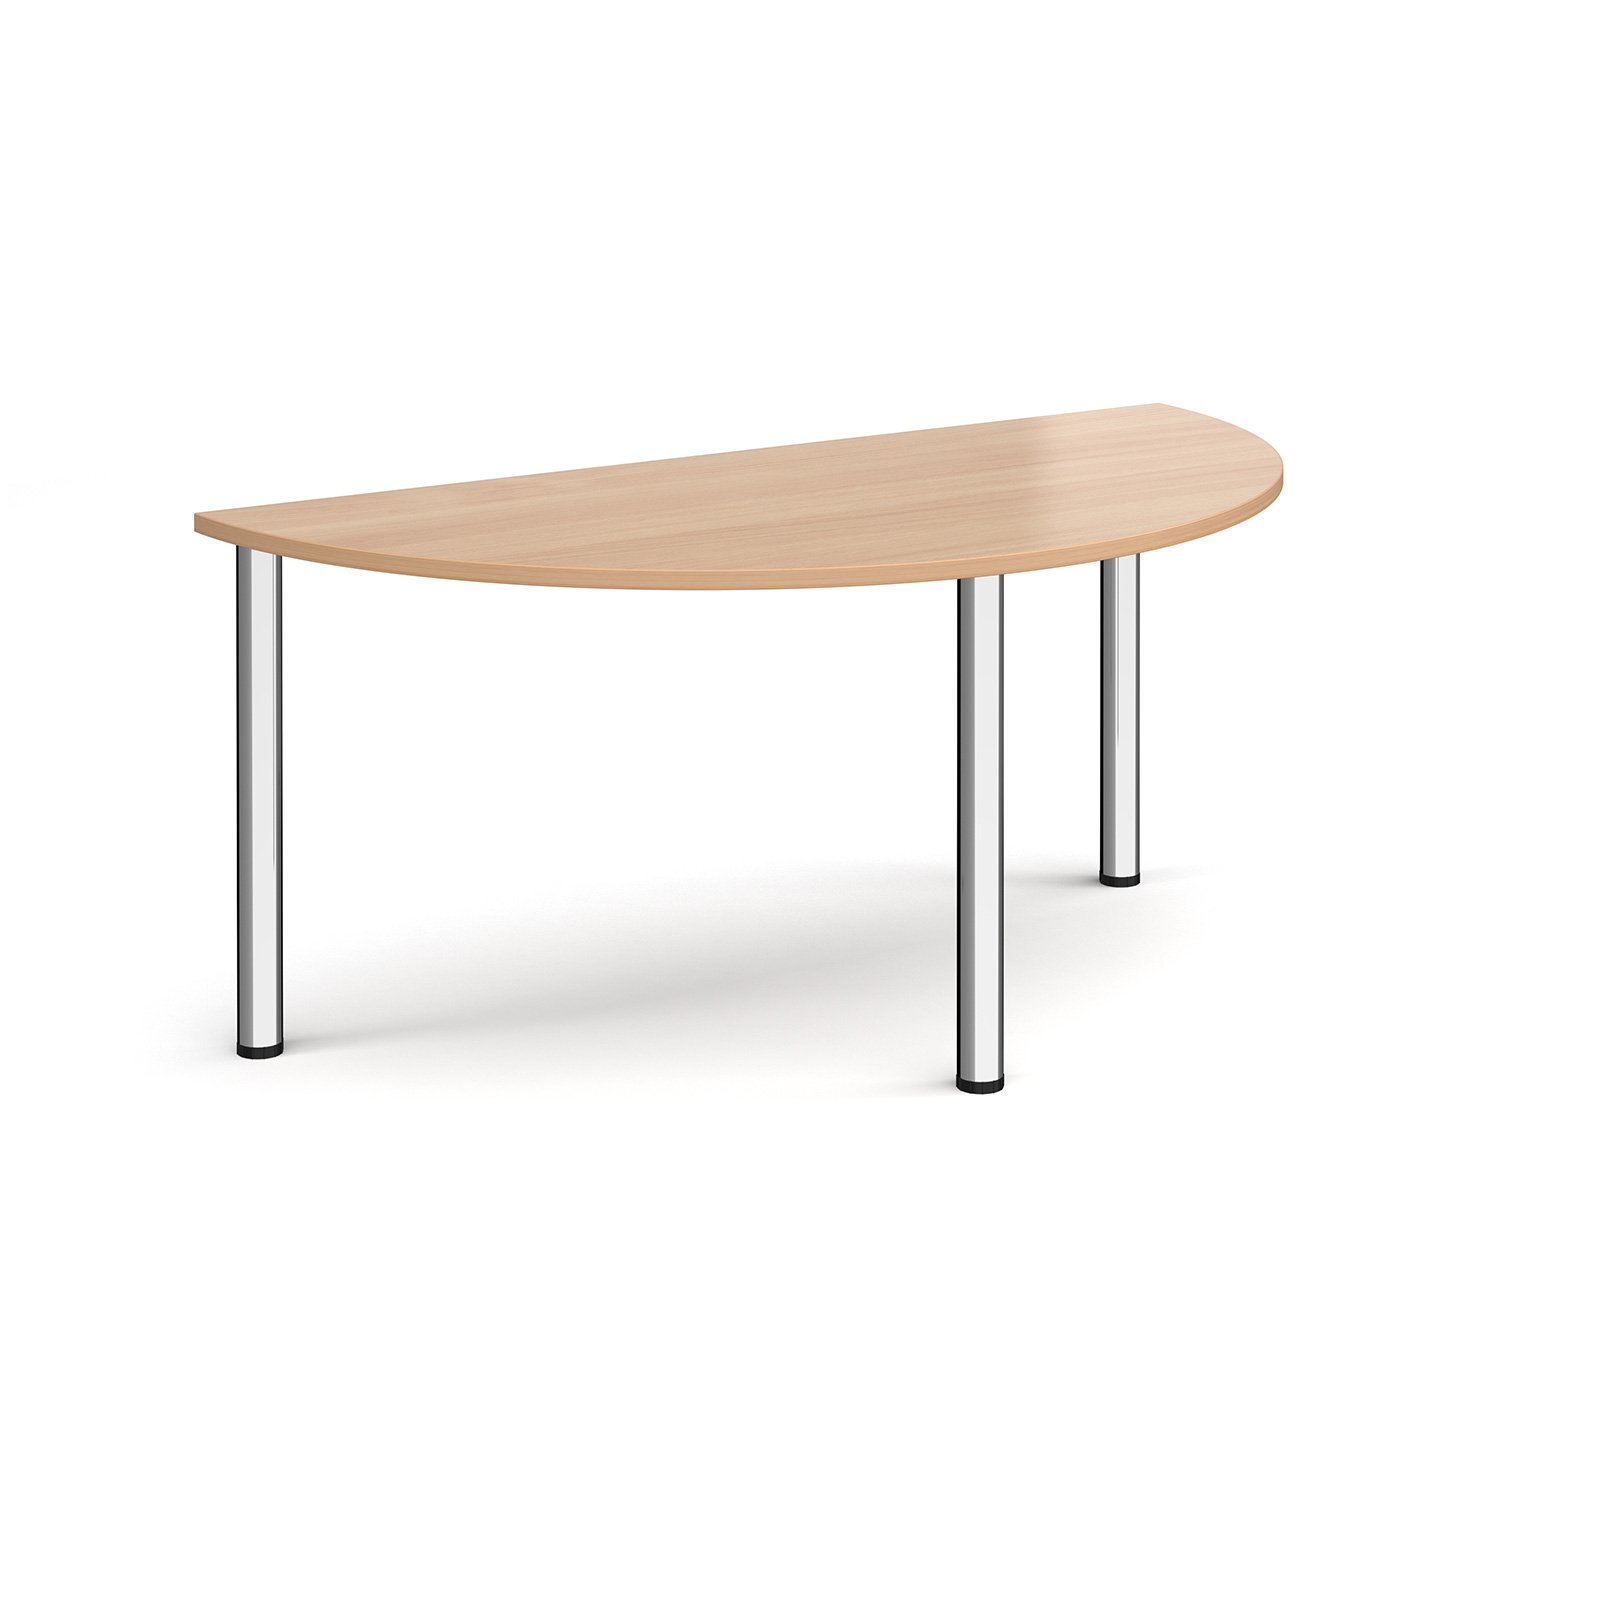 Semi circular chrome radial leg meeting table 1600mm x 800mm - beech